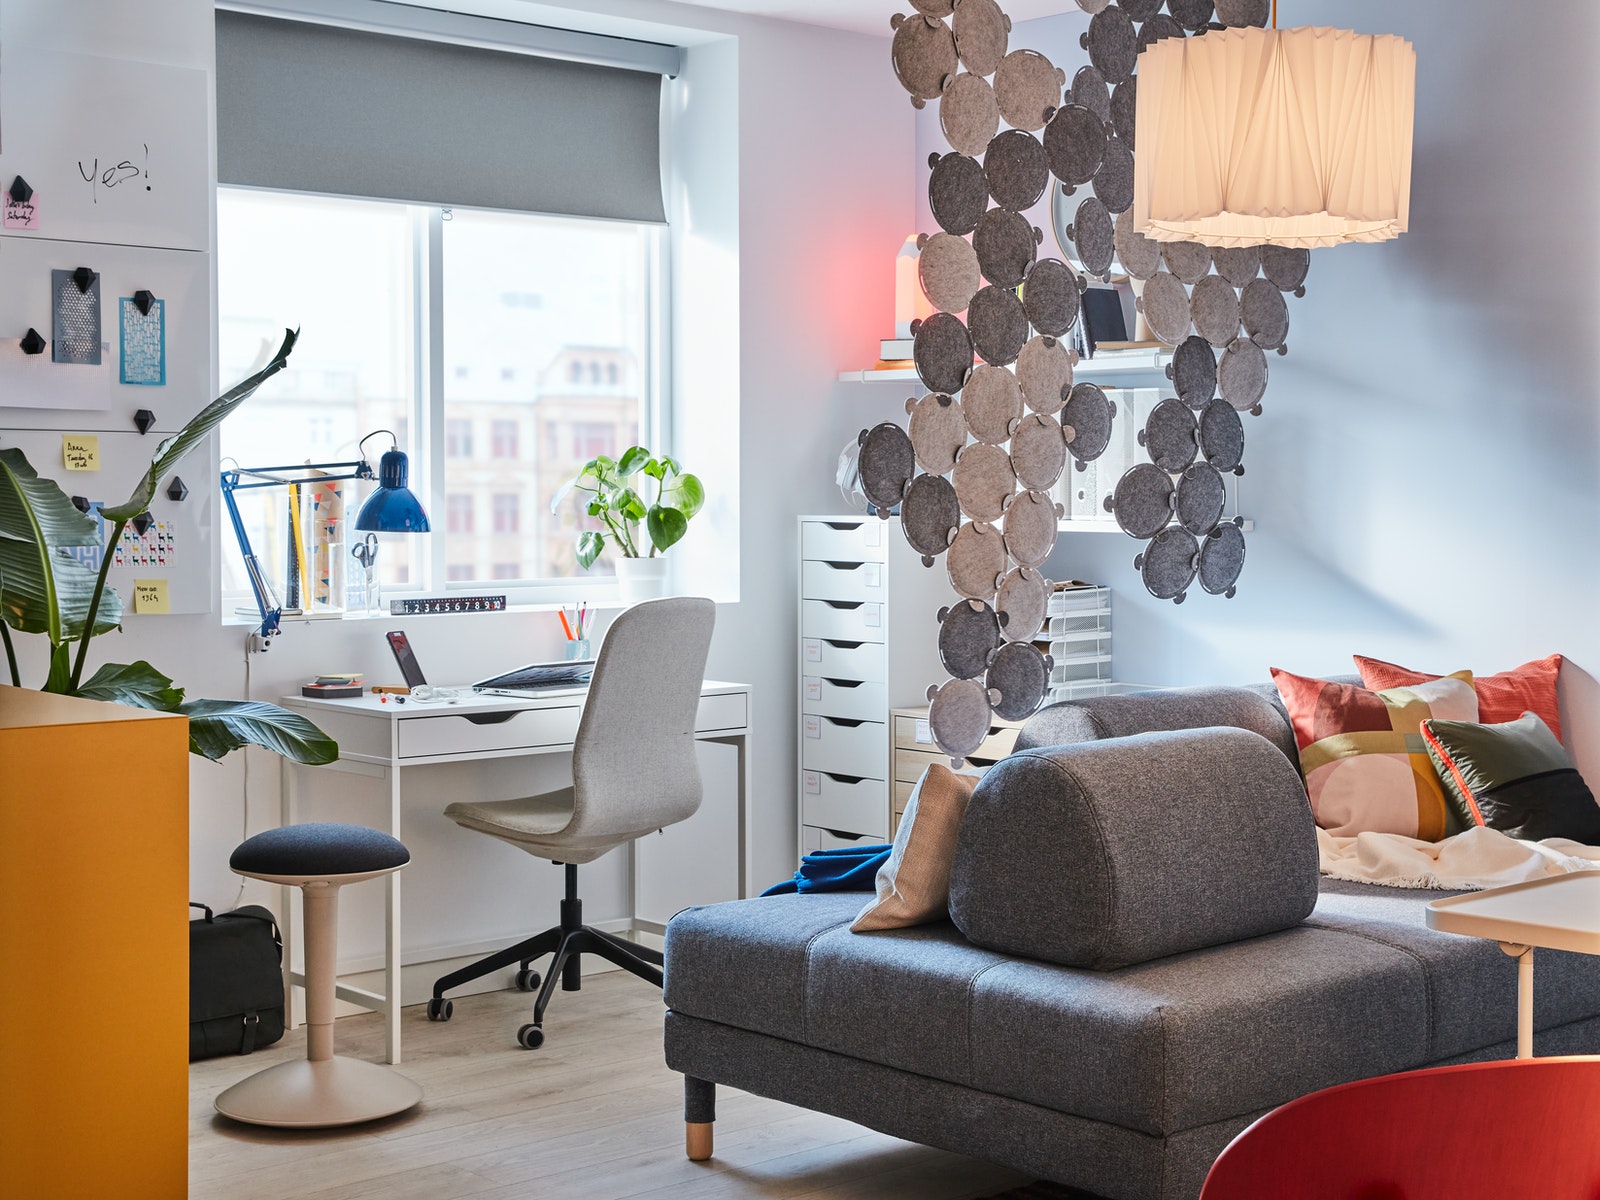 IKEA - A home office where creativity flows